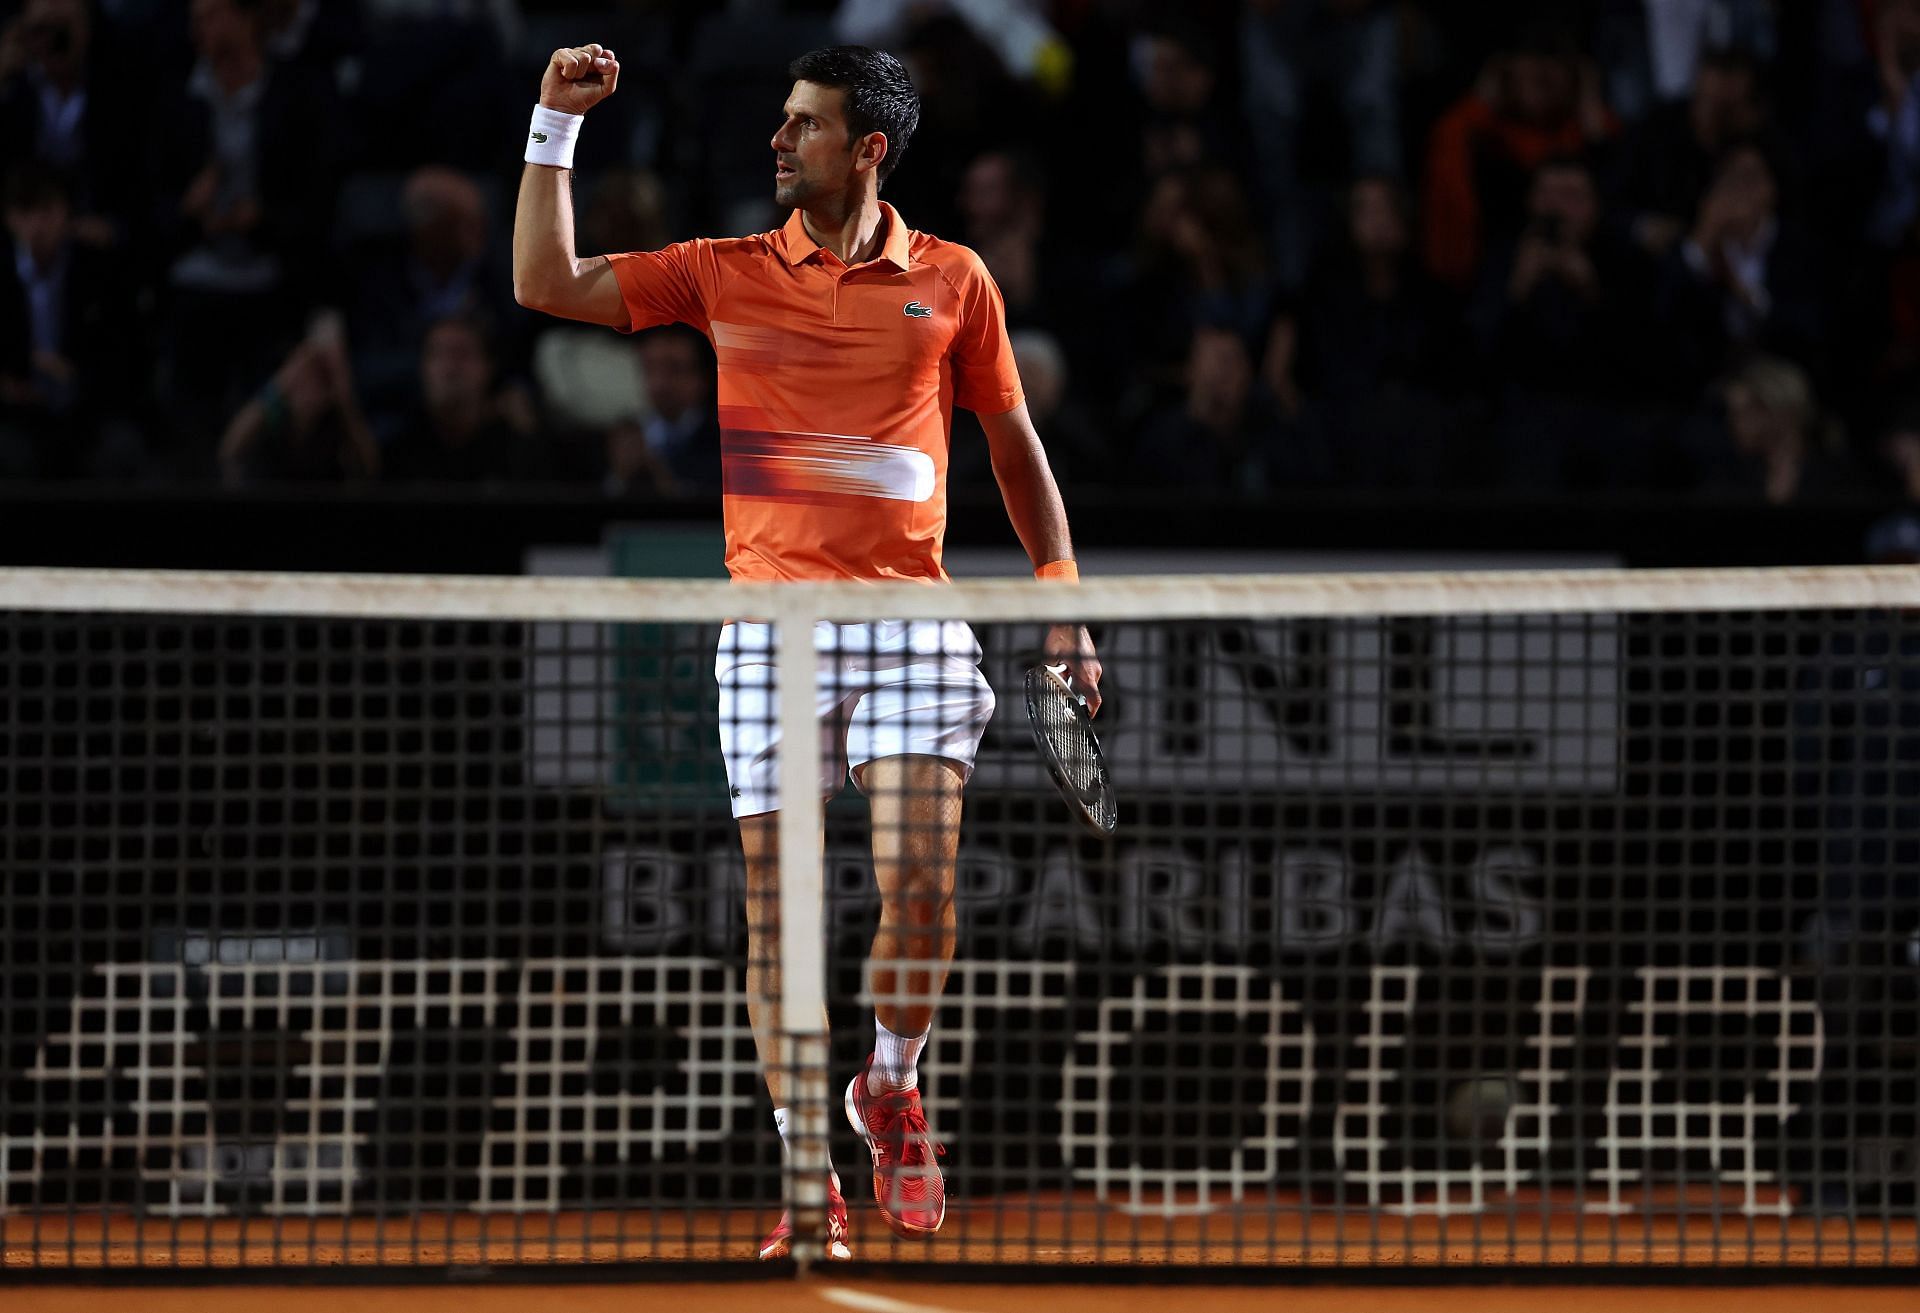 Novak Djokovic takes on Casper Ruud in the semifinals of the Italian Open